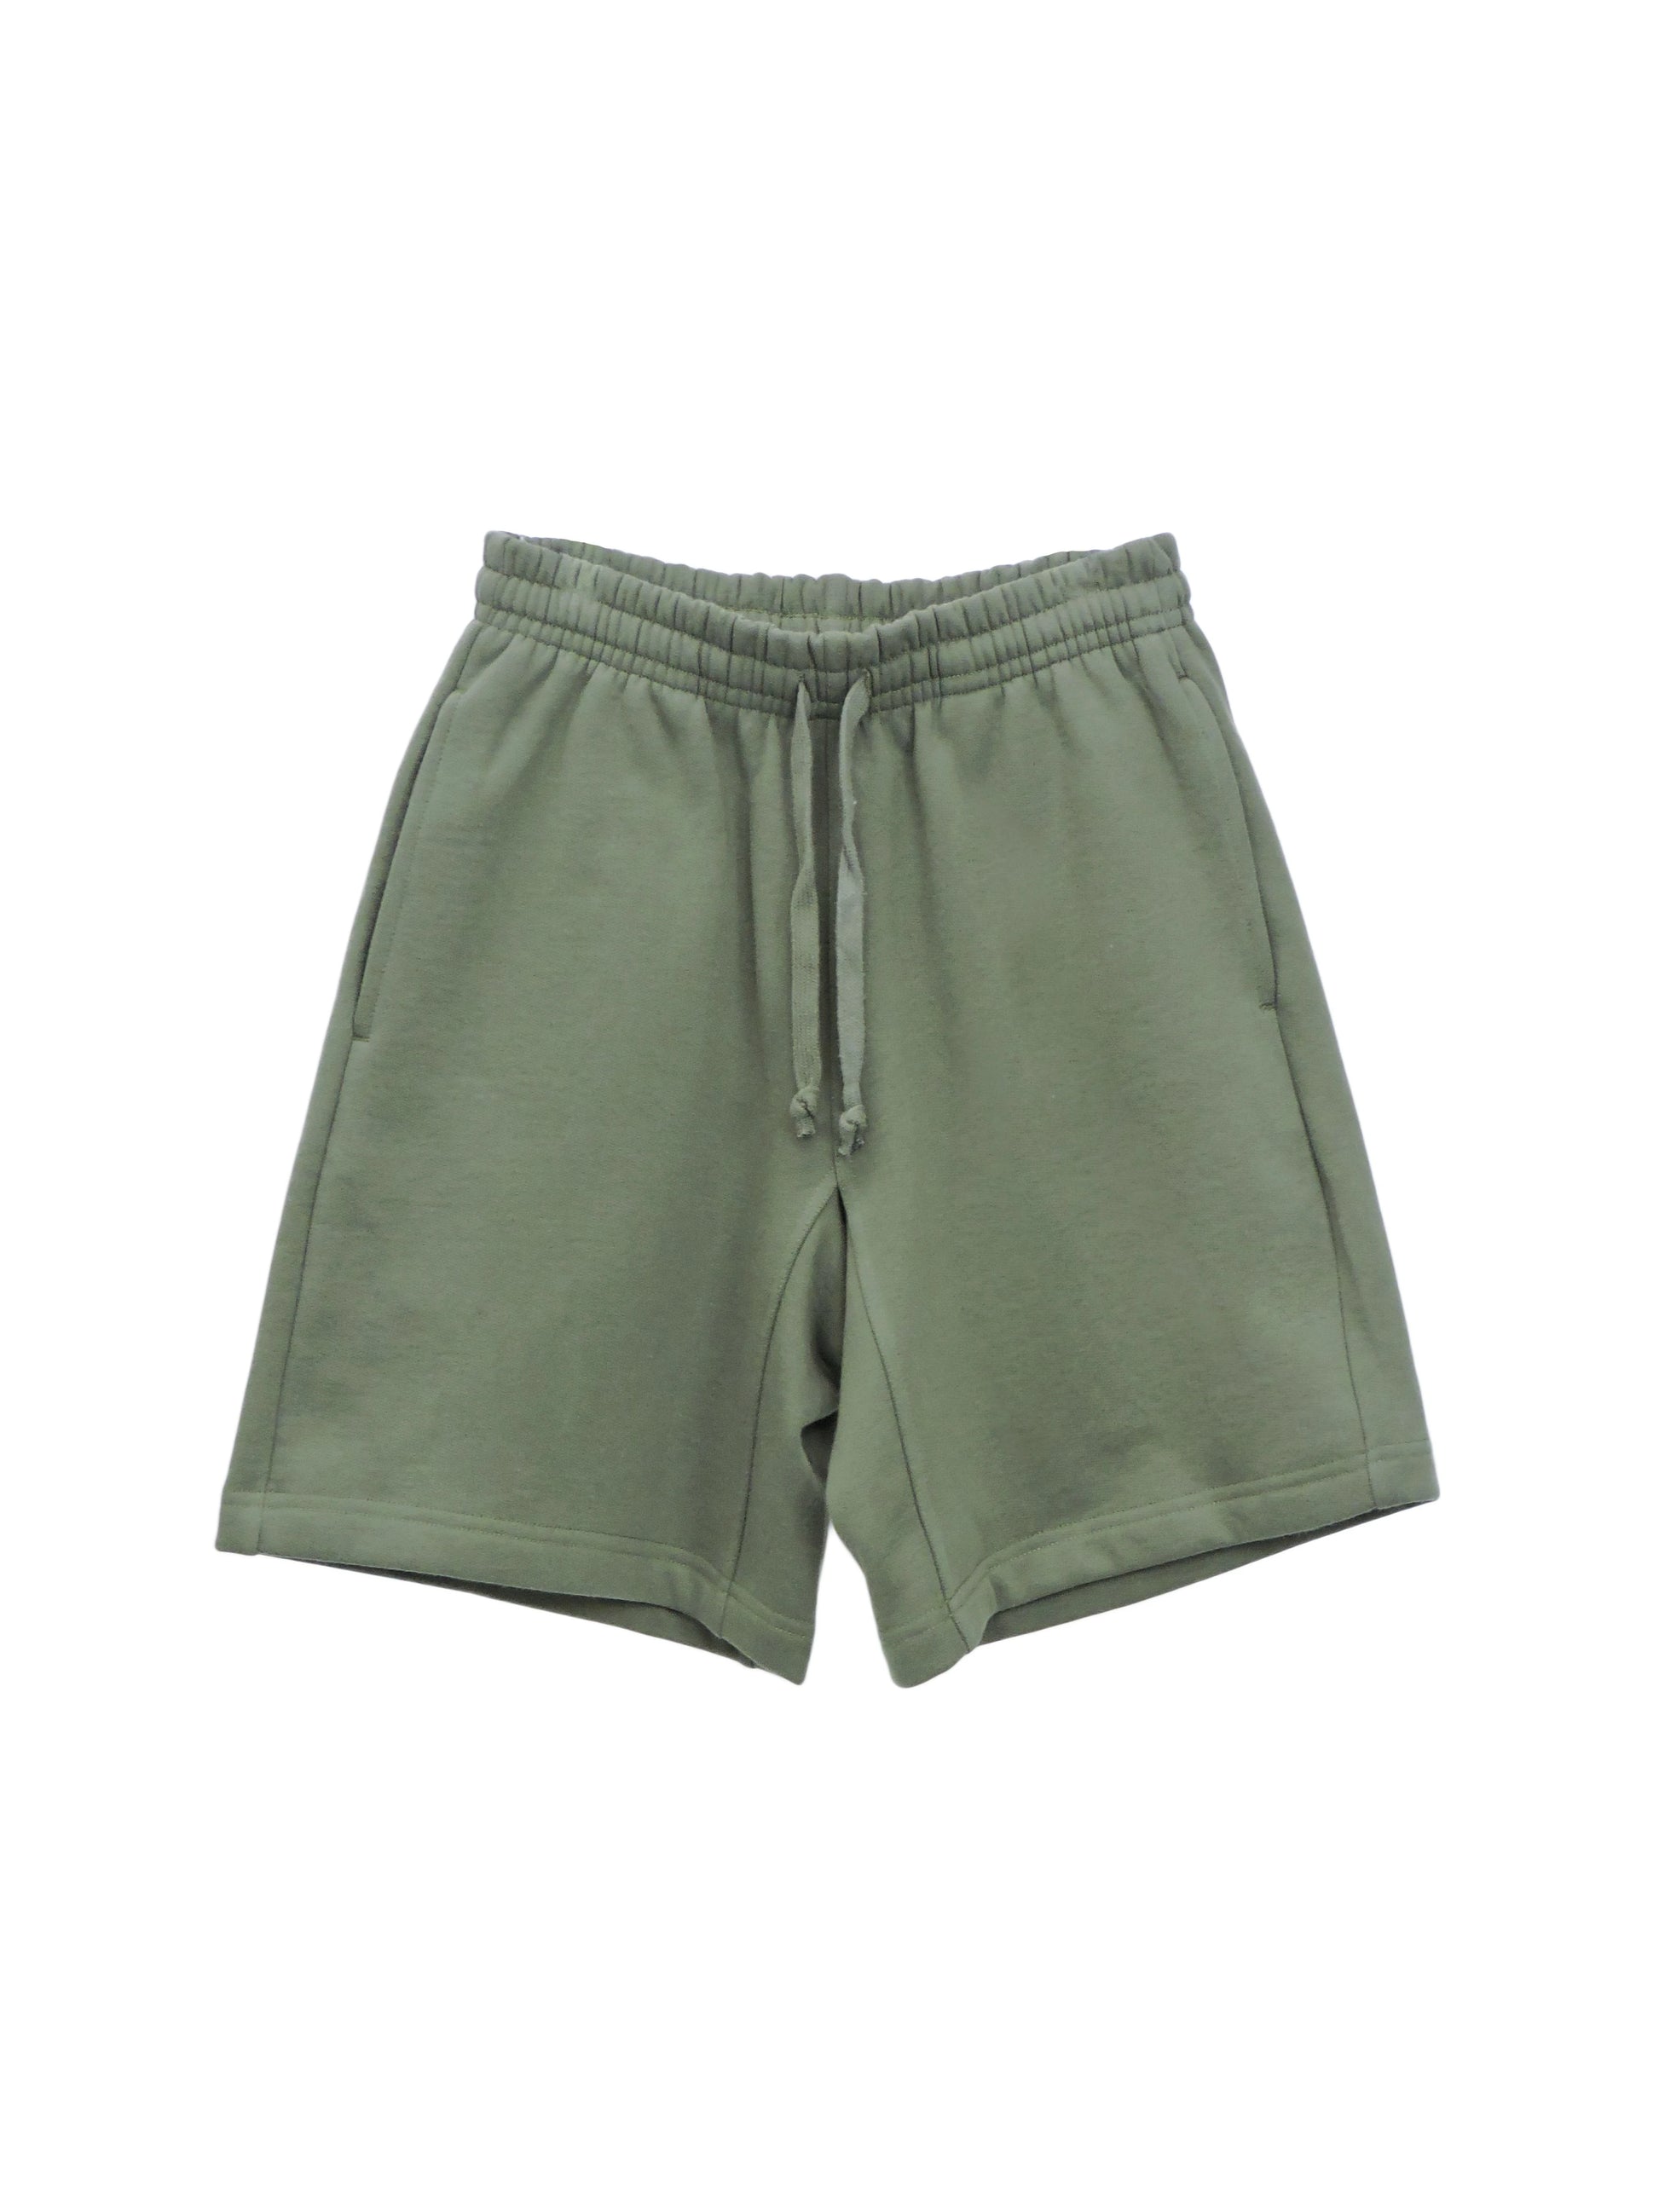 Premium Fleece Shorts - Olive Green M